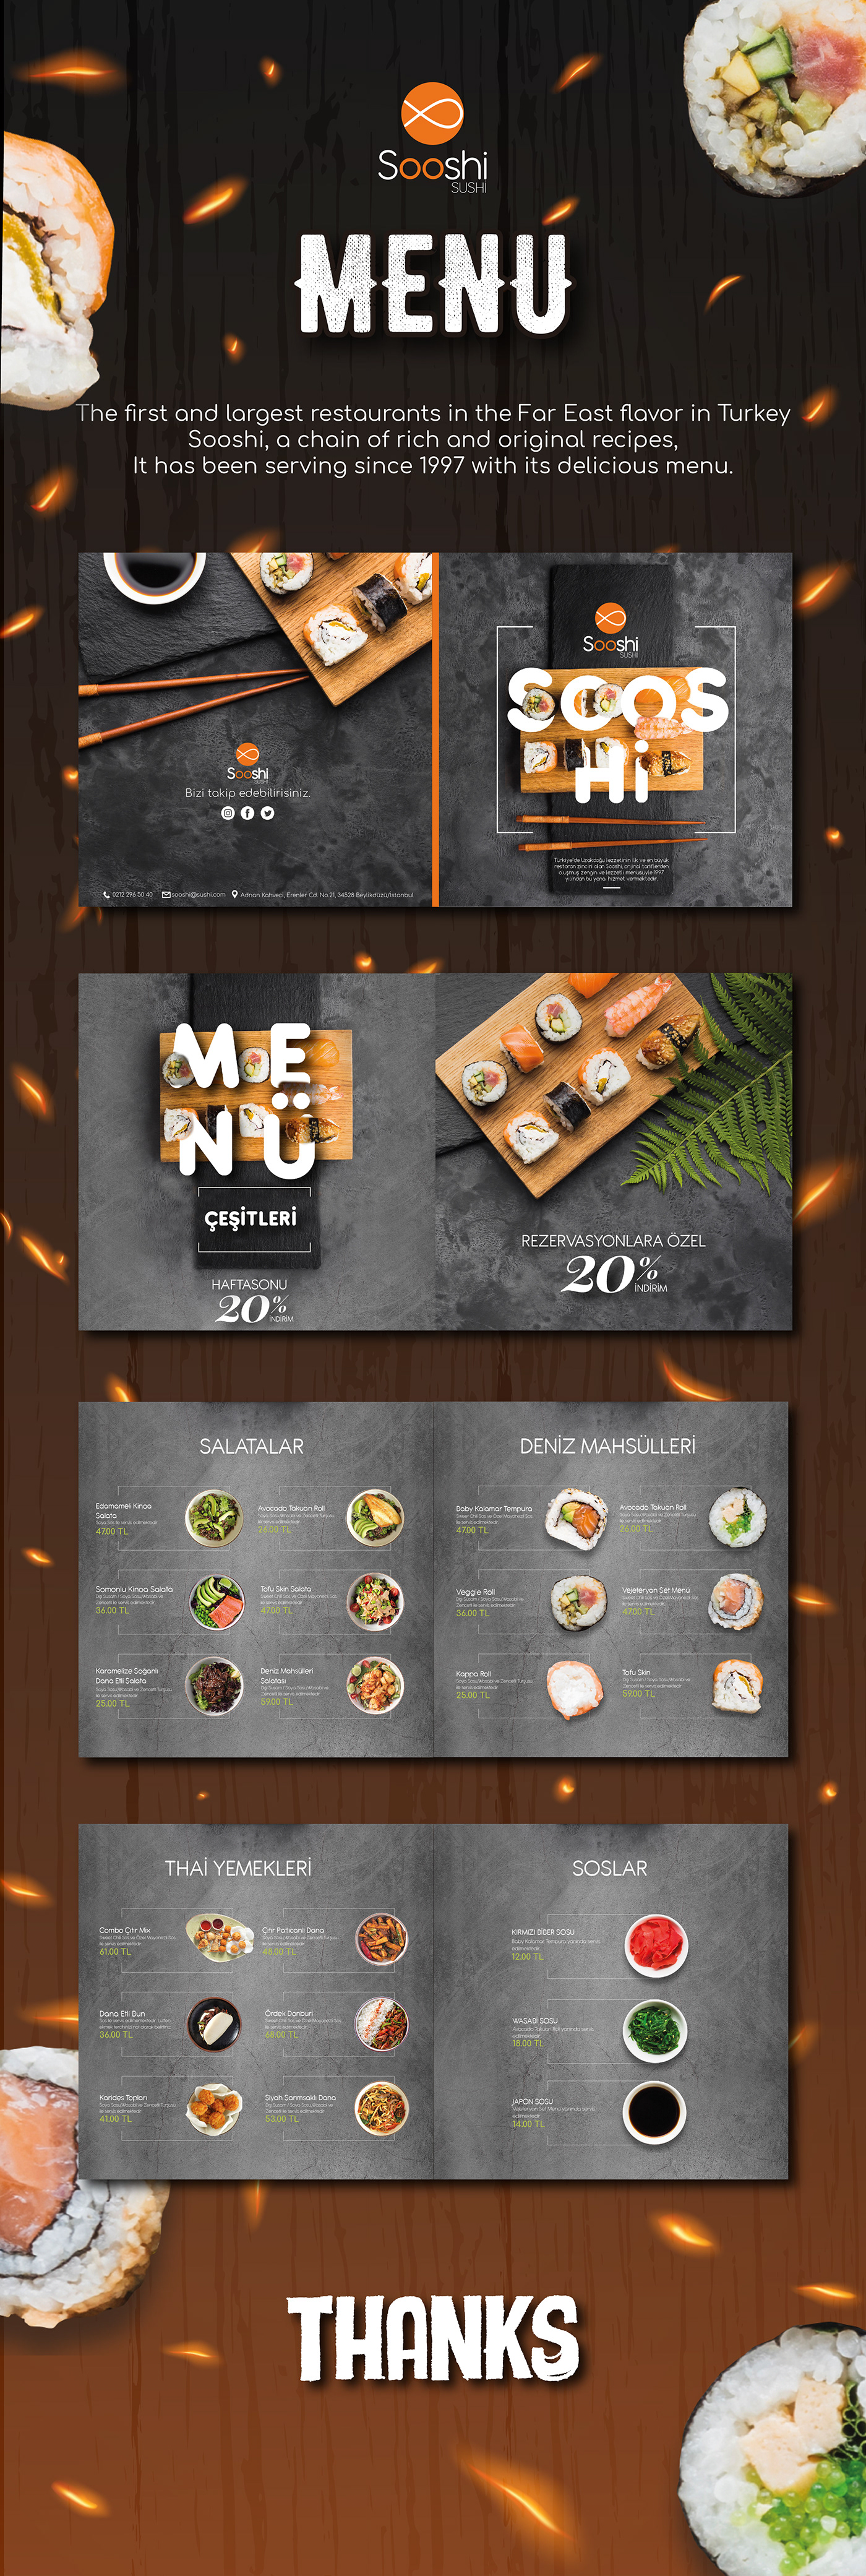 menu menu design Menü tasarımı Sushi sushi menu design sushi menü tasarımı fish Food  restaurant salad